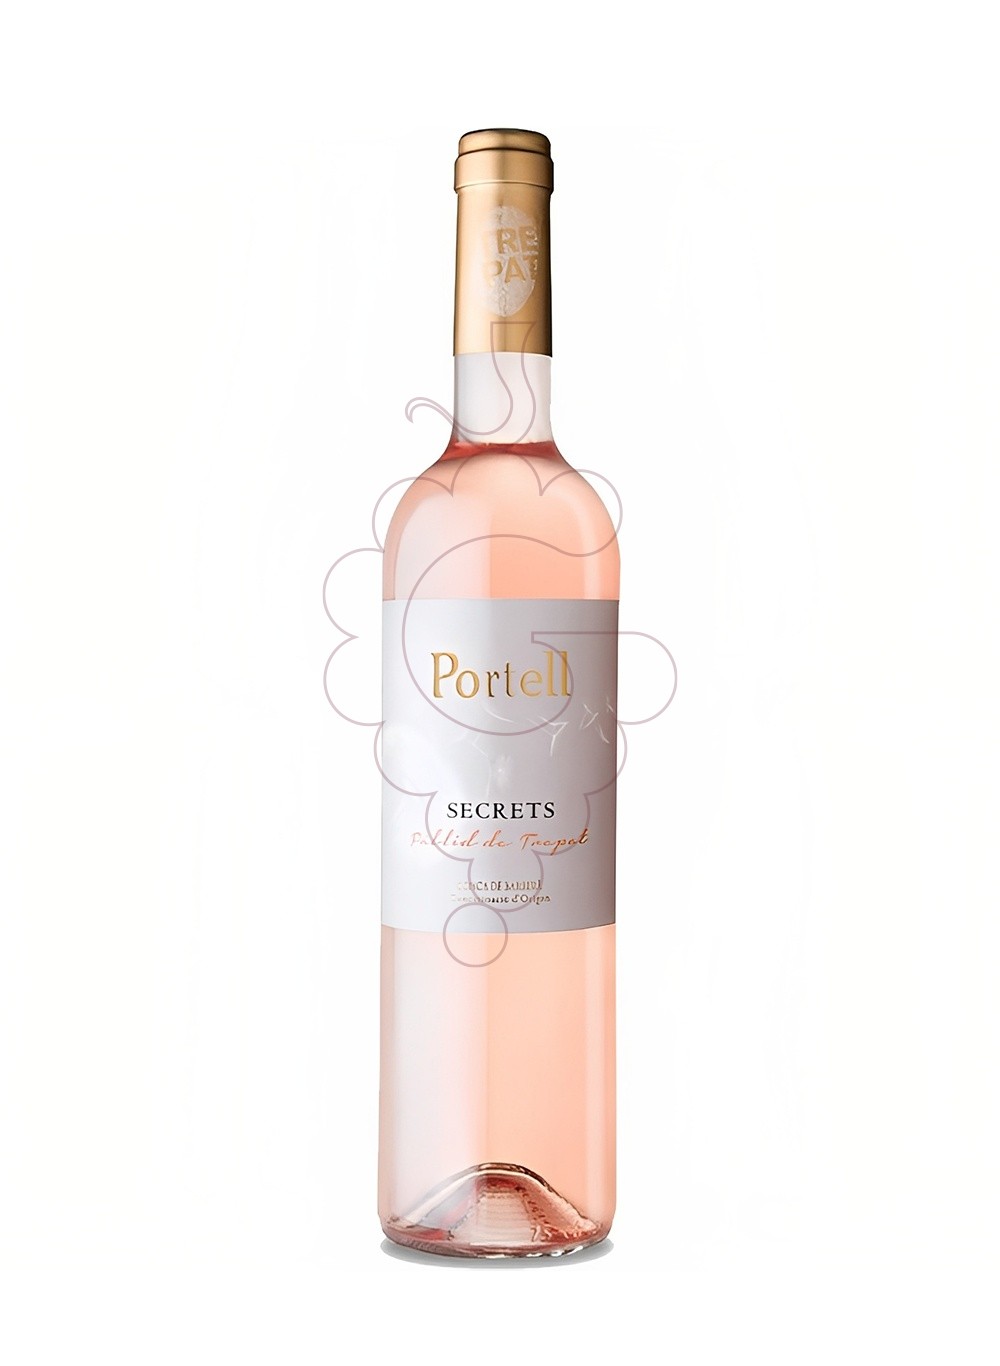 Foto Portell Secrets vino rosado